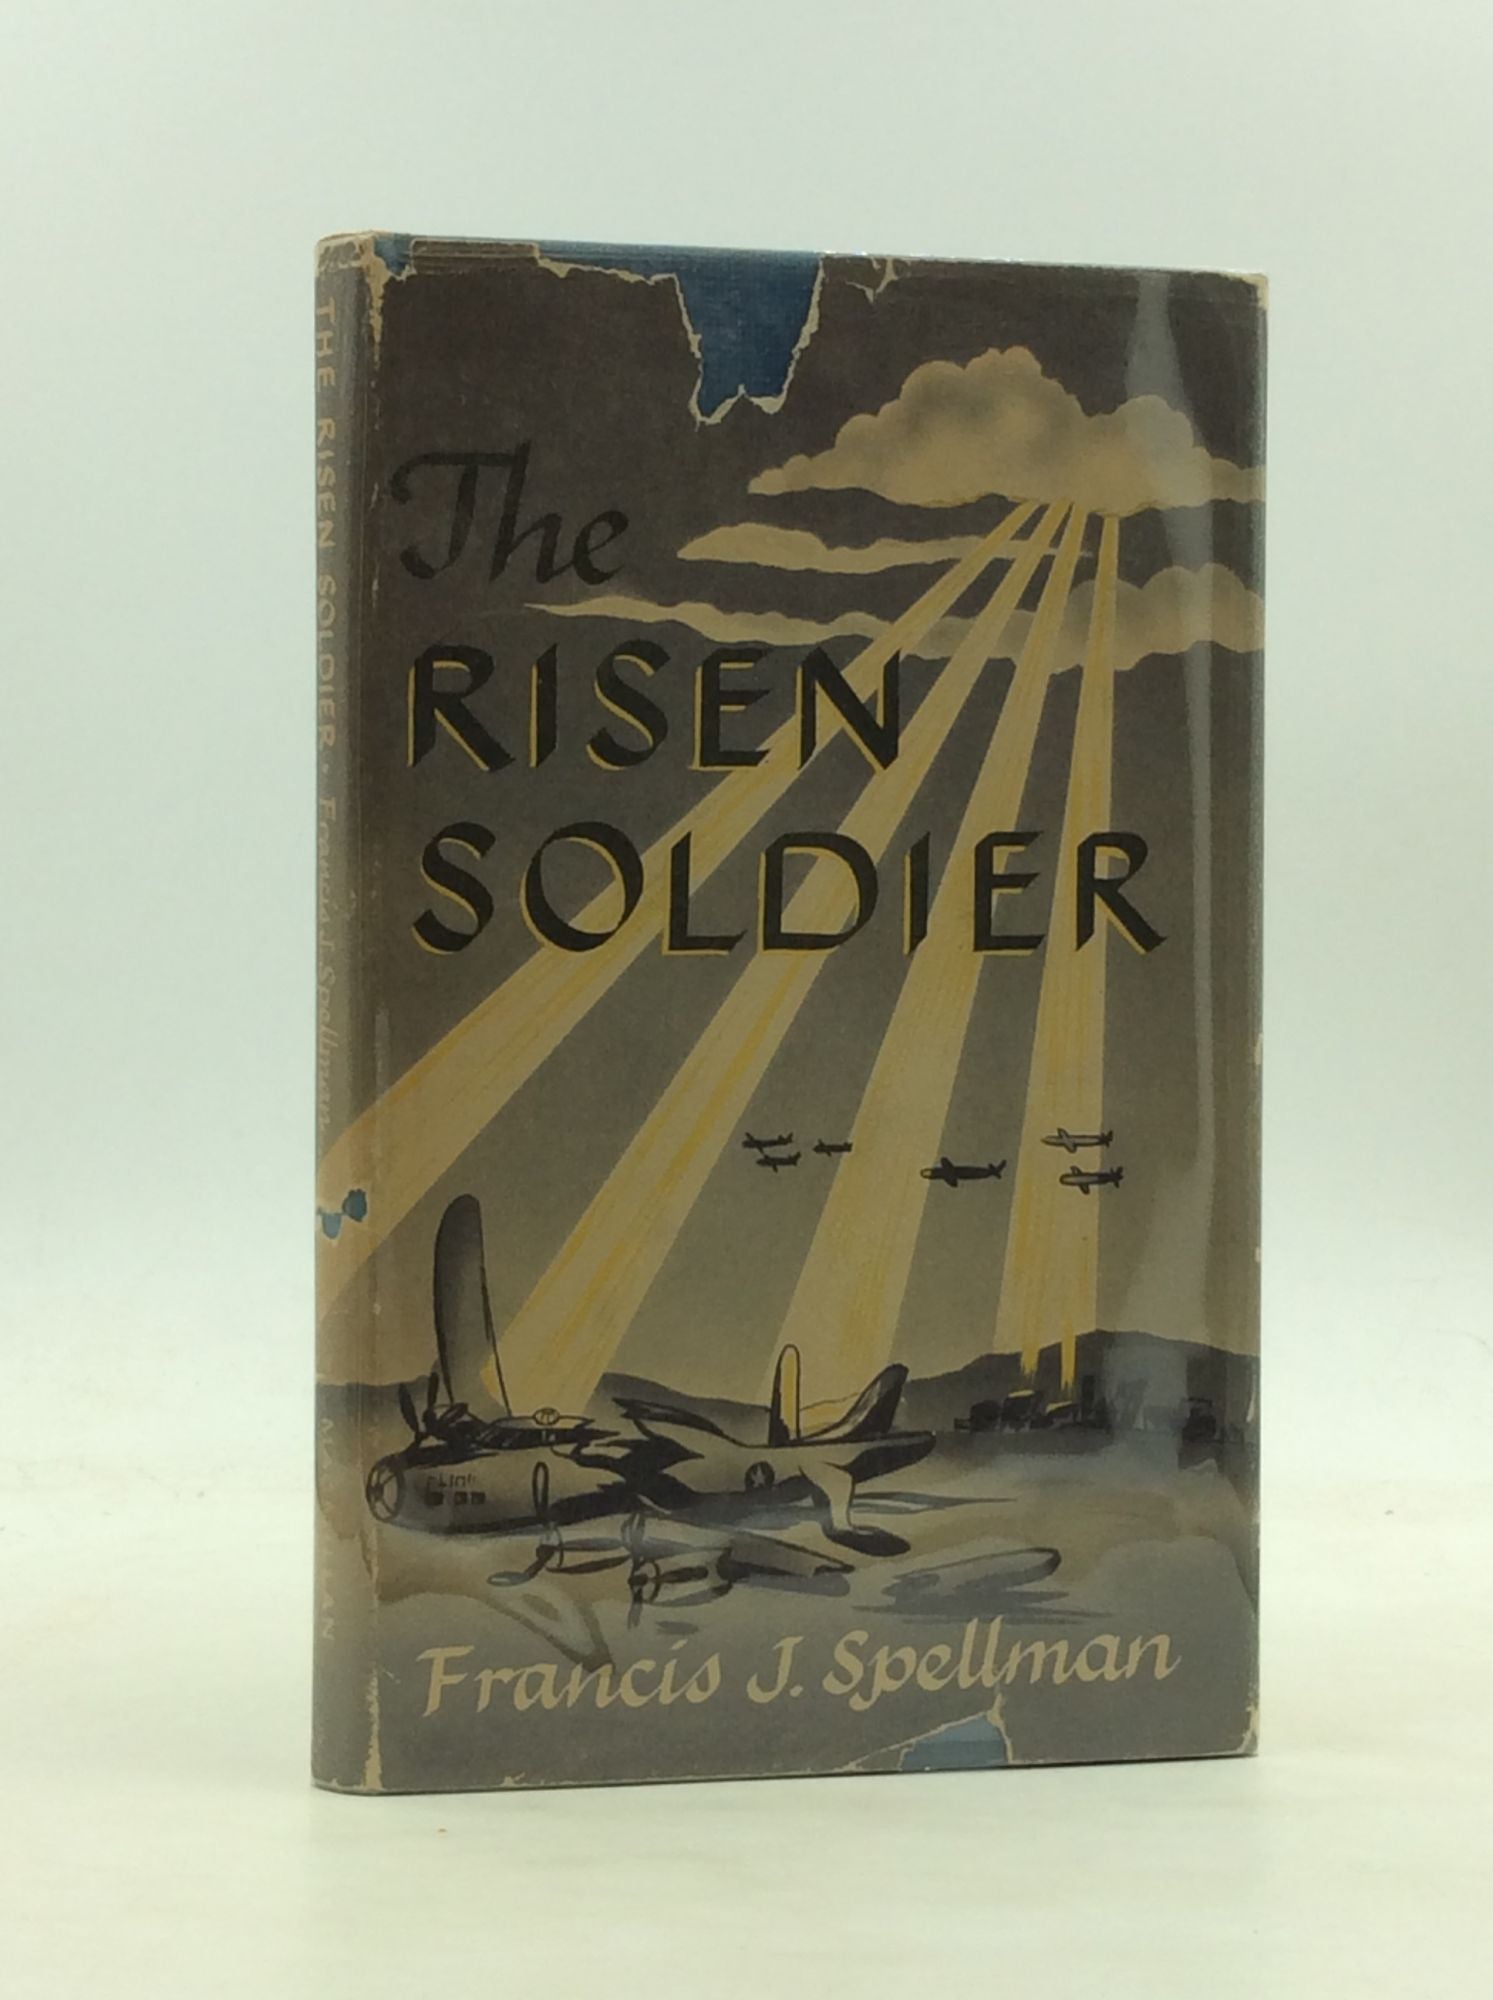 Francis J. Spellman - The Risen Soldier